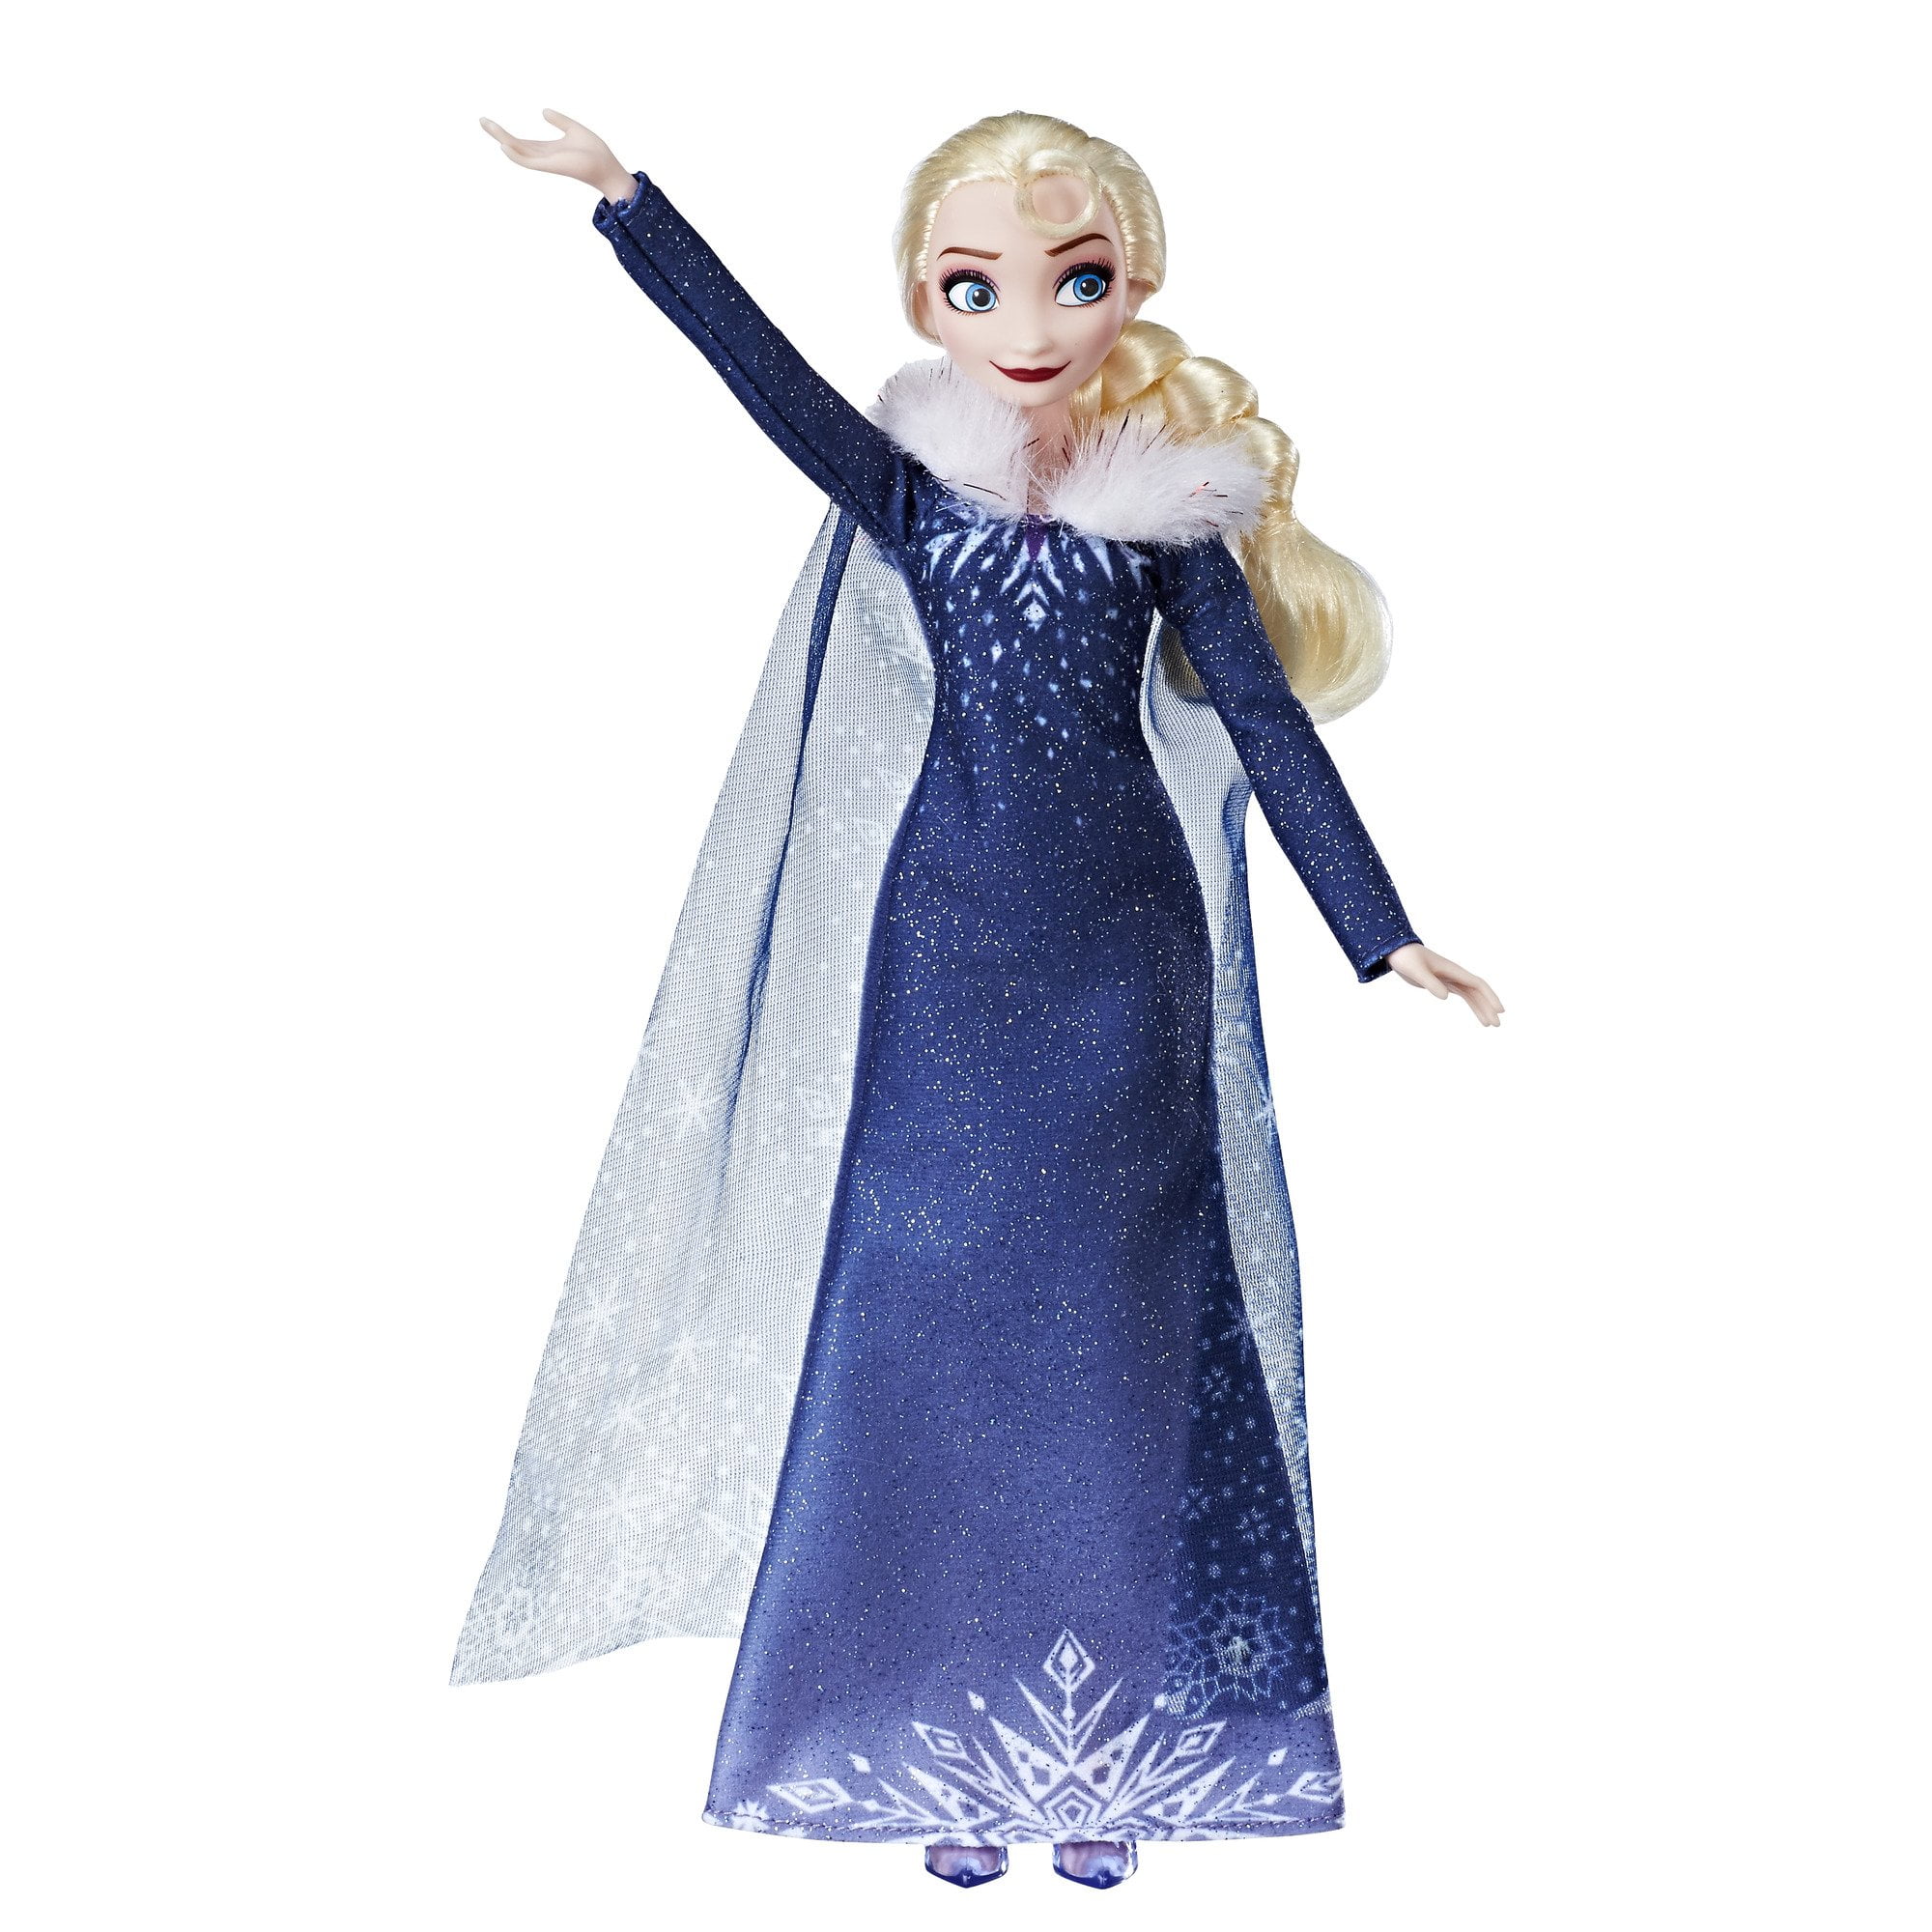 Details about   Disney Frozen 2 Musical Adventure Elsa Singing Doll 2020 New Release 